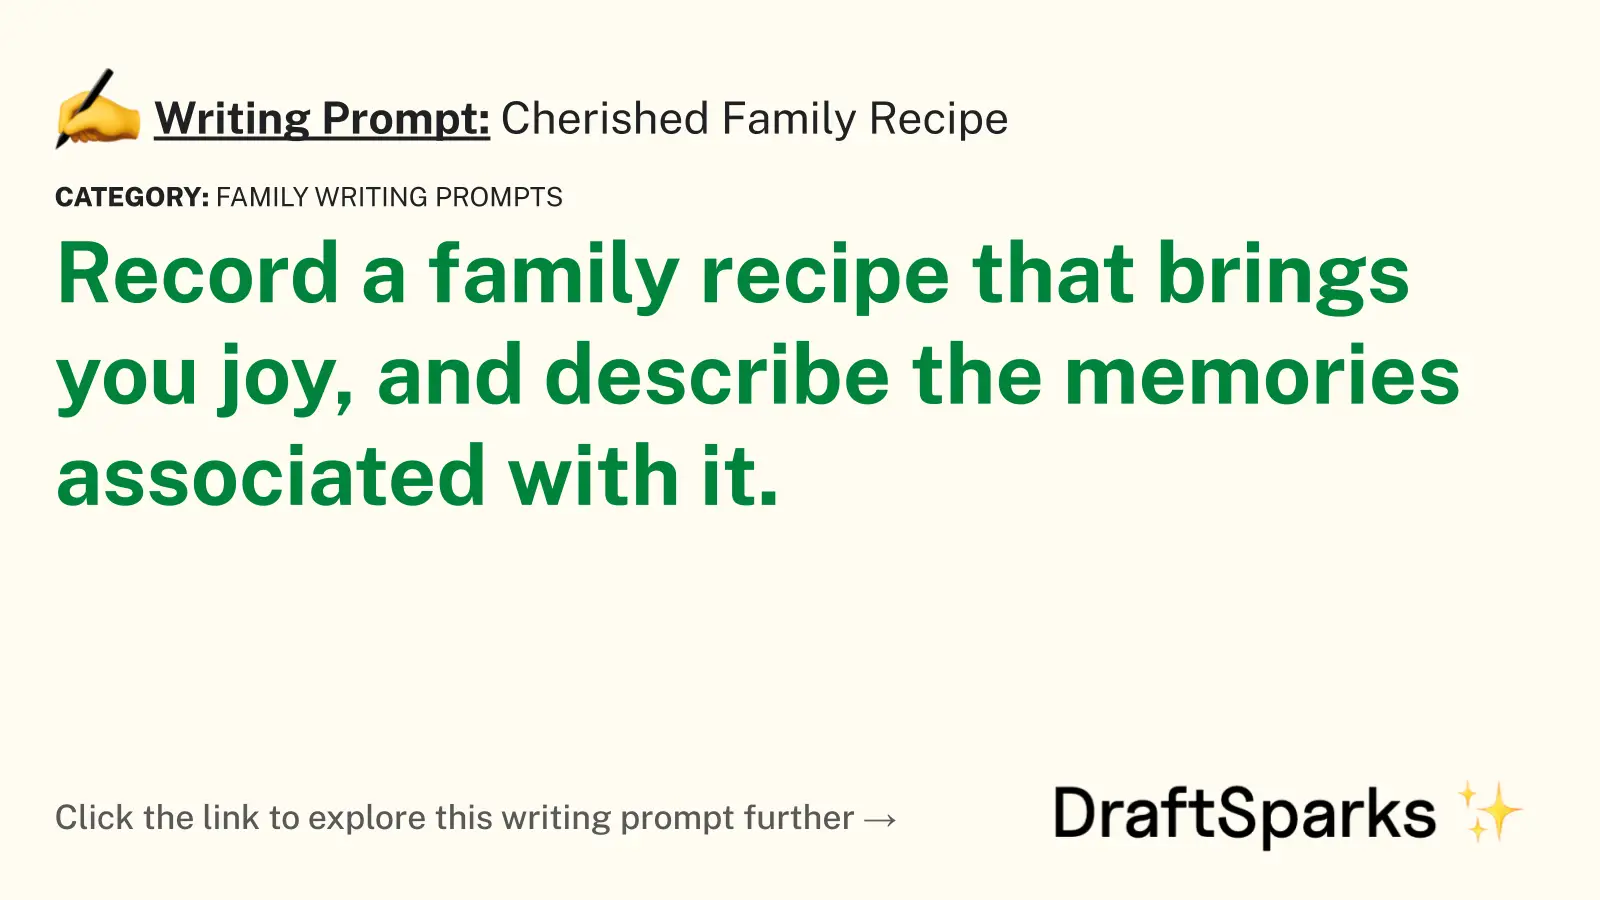 Cherished Family Recipe